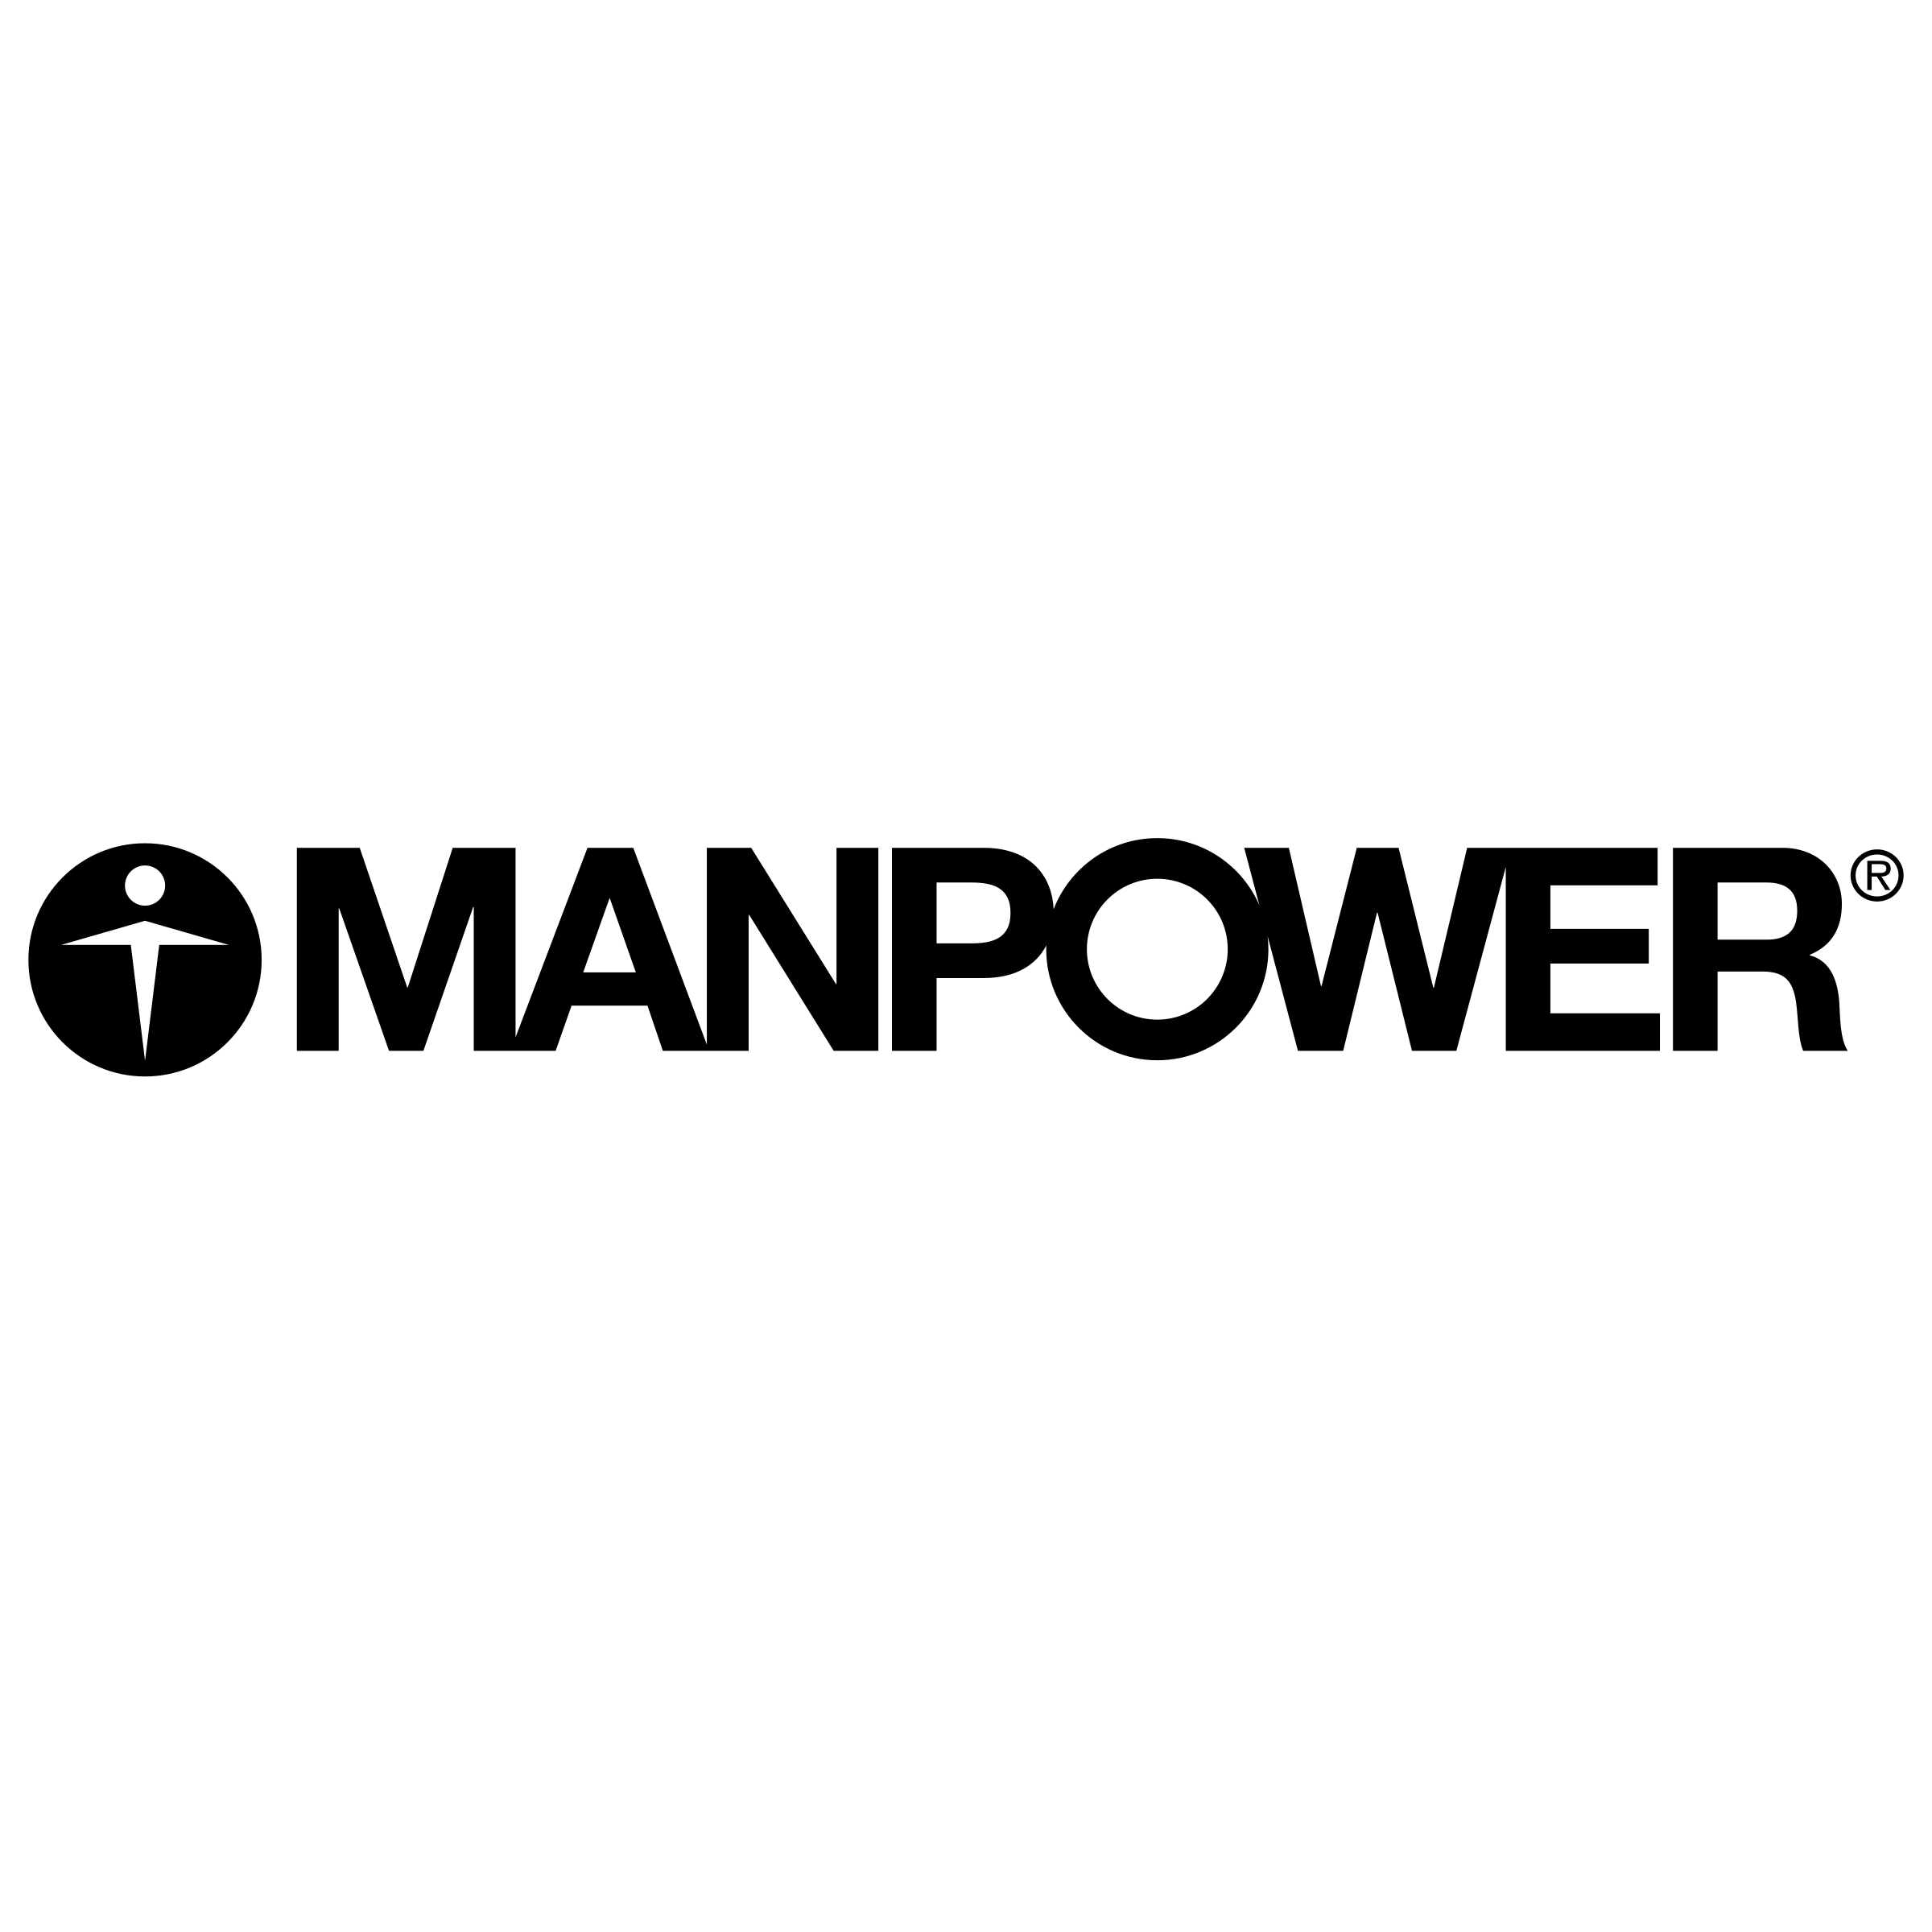 Manpower Logo - Manpower Logo PNG Transparent & SVG Vector - Freebie Supply